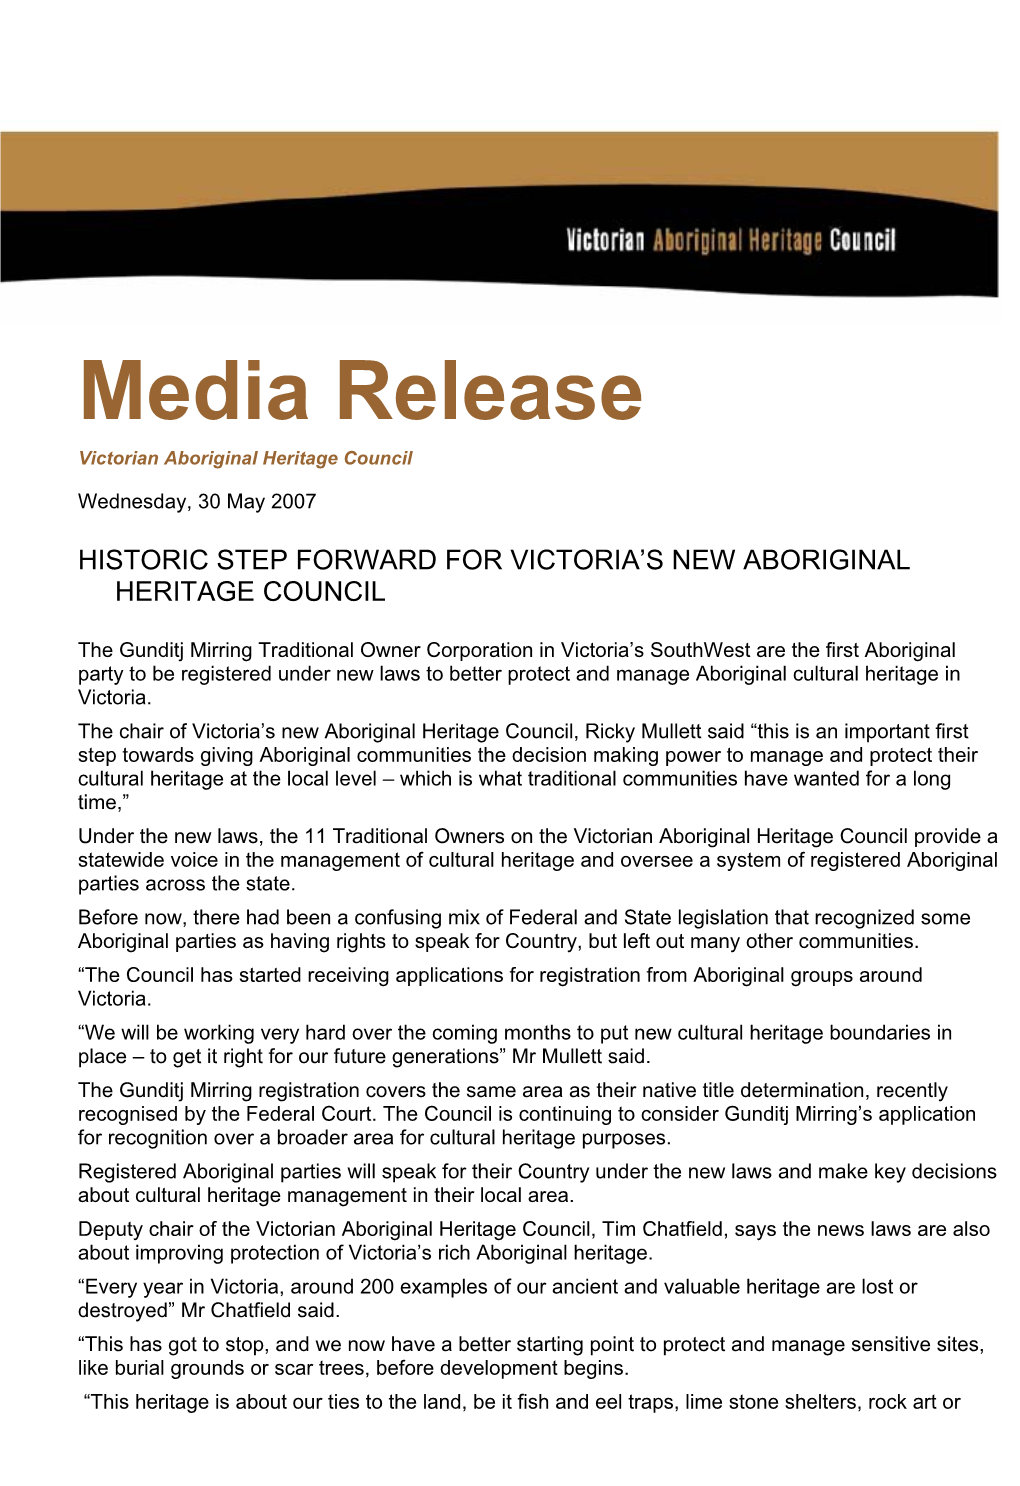 Microsoft Word - Historic Step Forward for Victoria's New Aboriginal Herita05